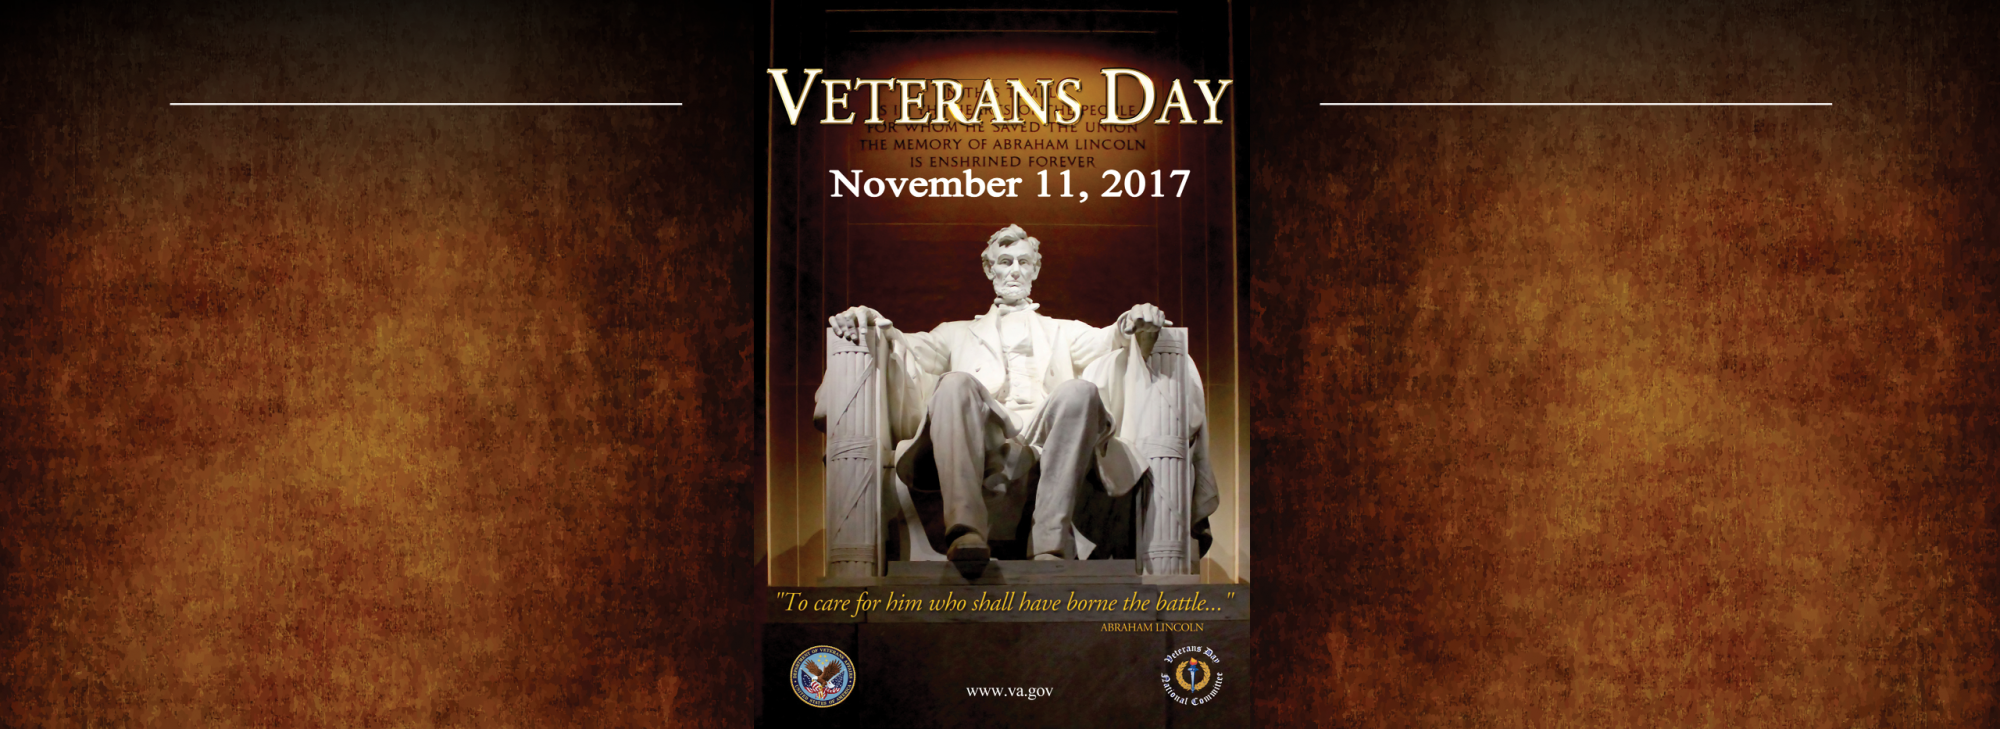 veterans day november 11, 2017